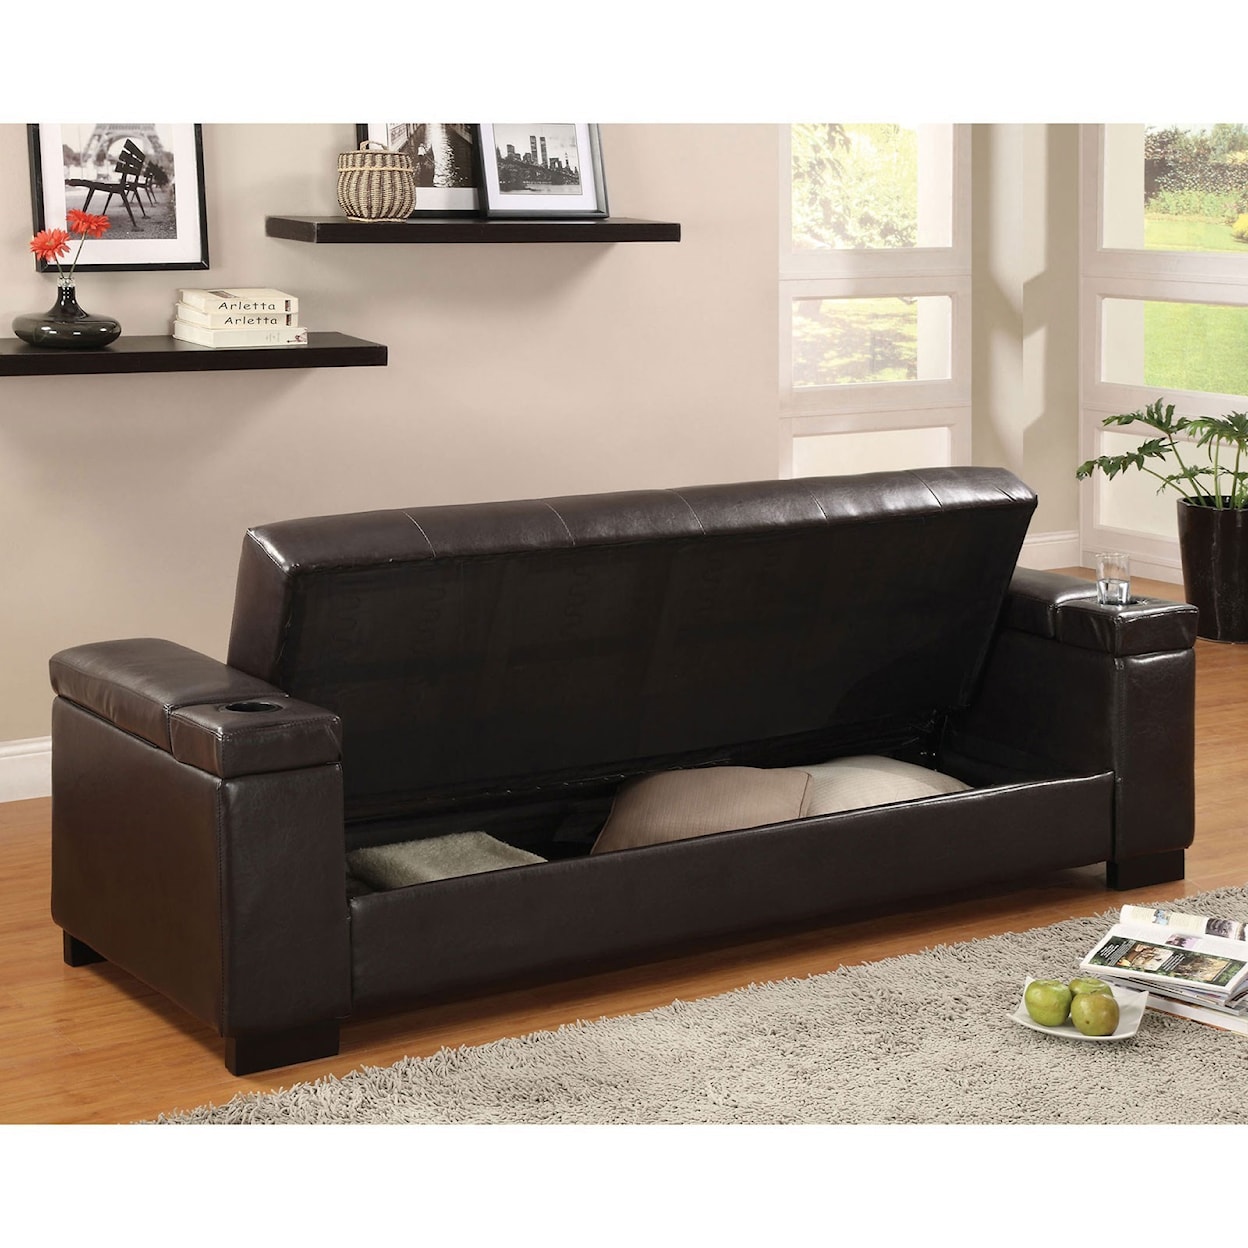 Furniture of America Logan CM2123-PK Leatherette Futon Sofa with Storage | Furniture | Futons